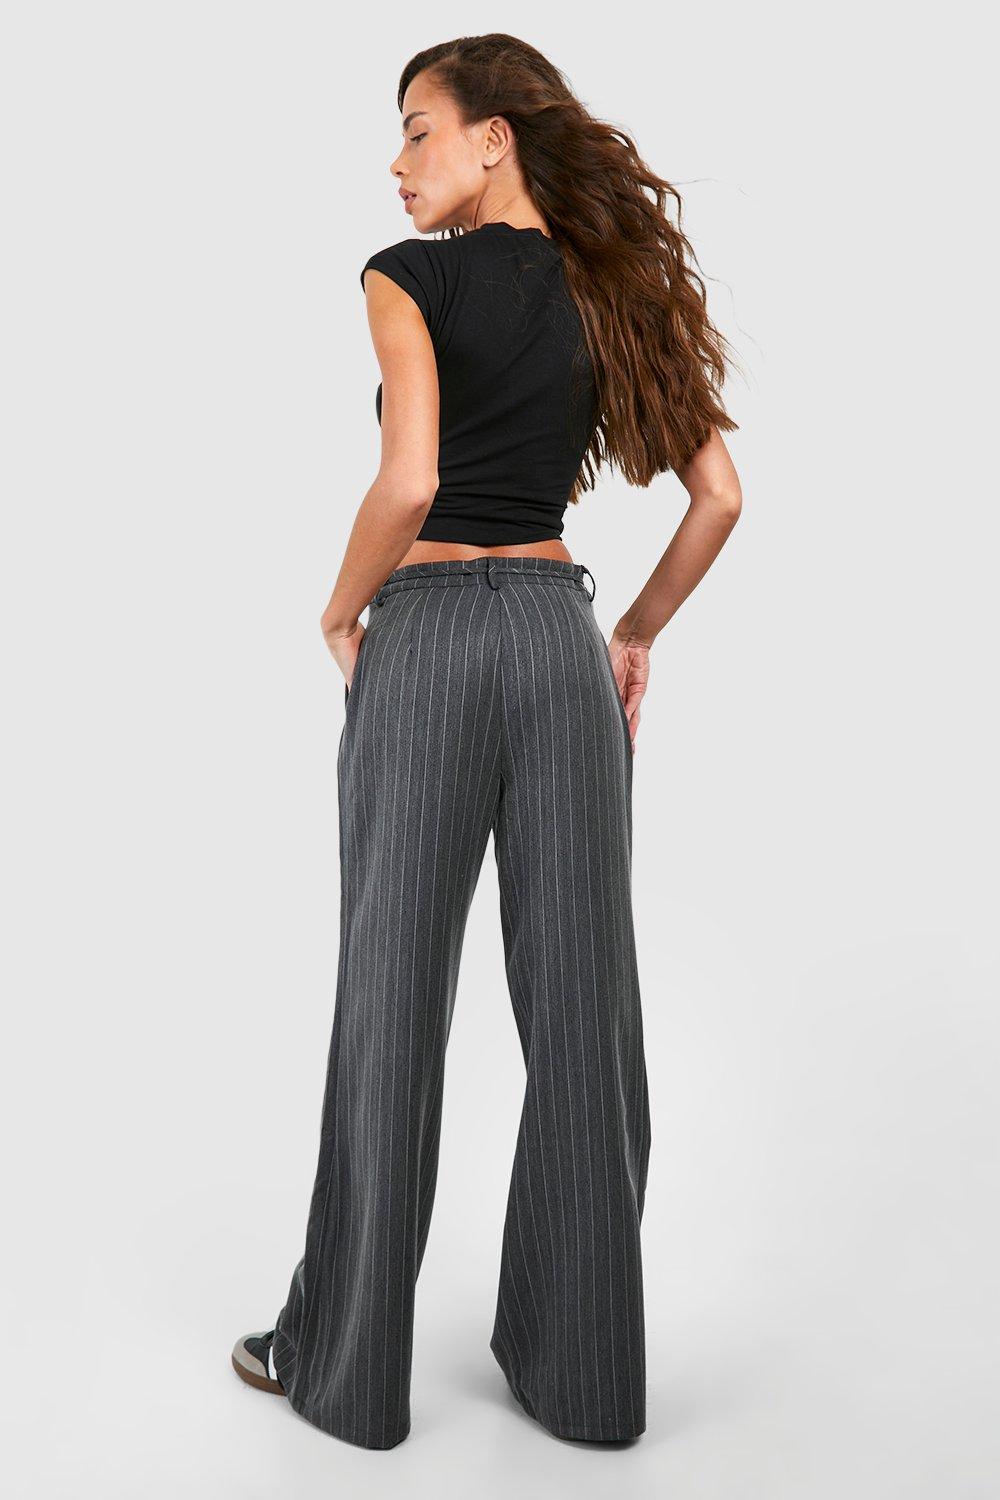 https://media.boohoo.com/i/boohoo/gzz79129_charcoal_xl_1/female-charcoal-pinstripe-tie-waist-tailored-wide-leg-trousers